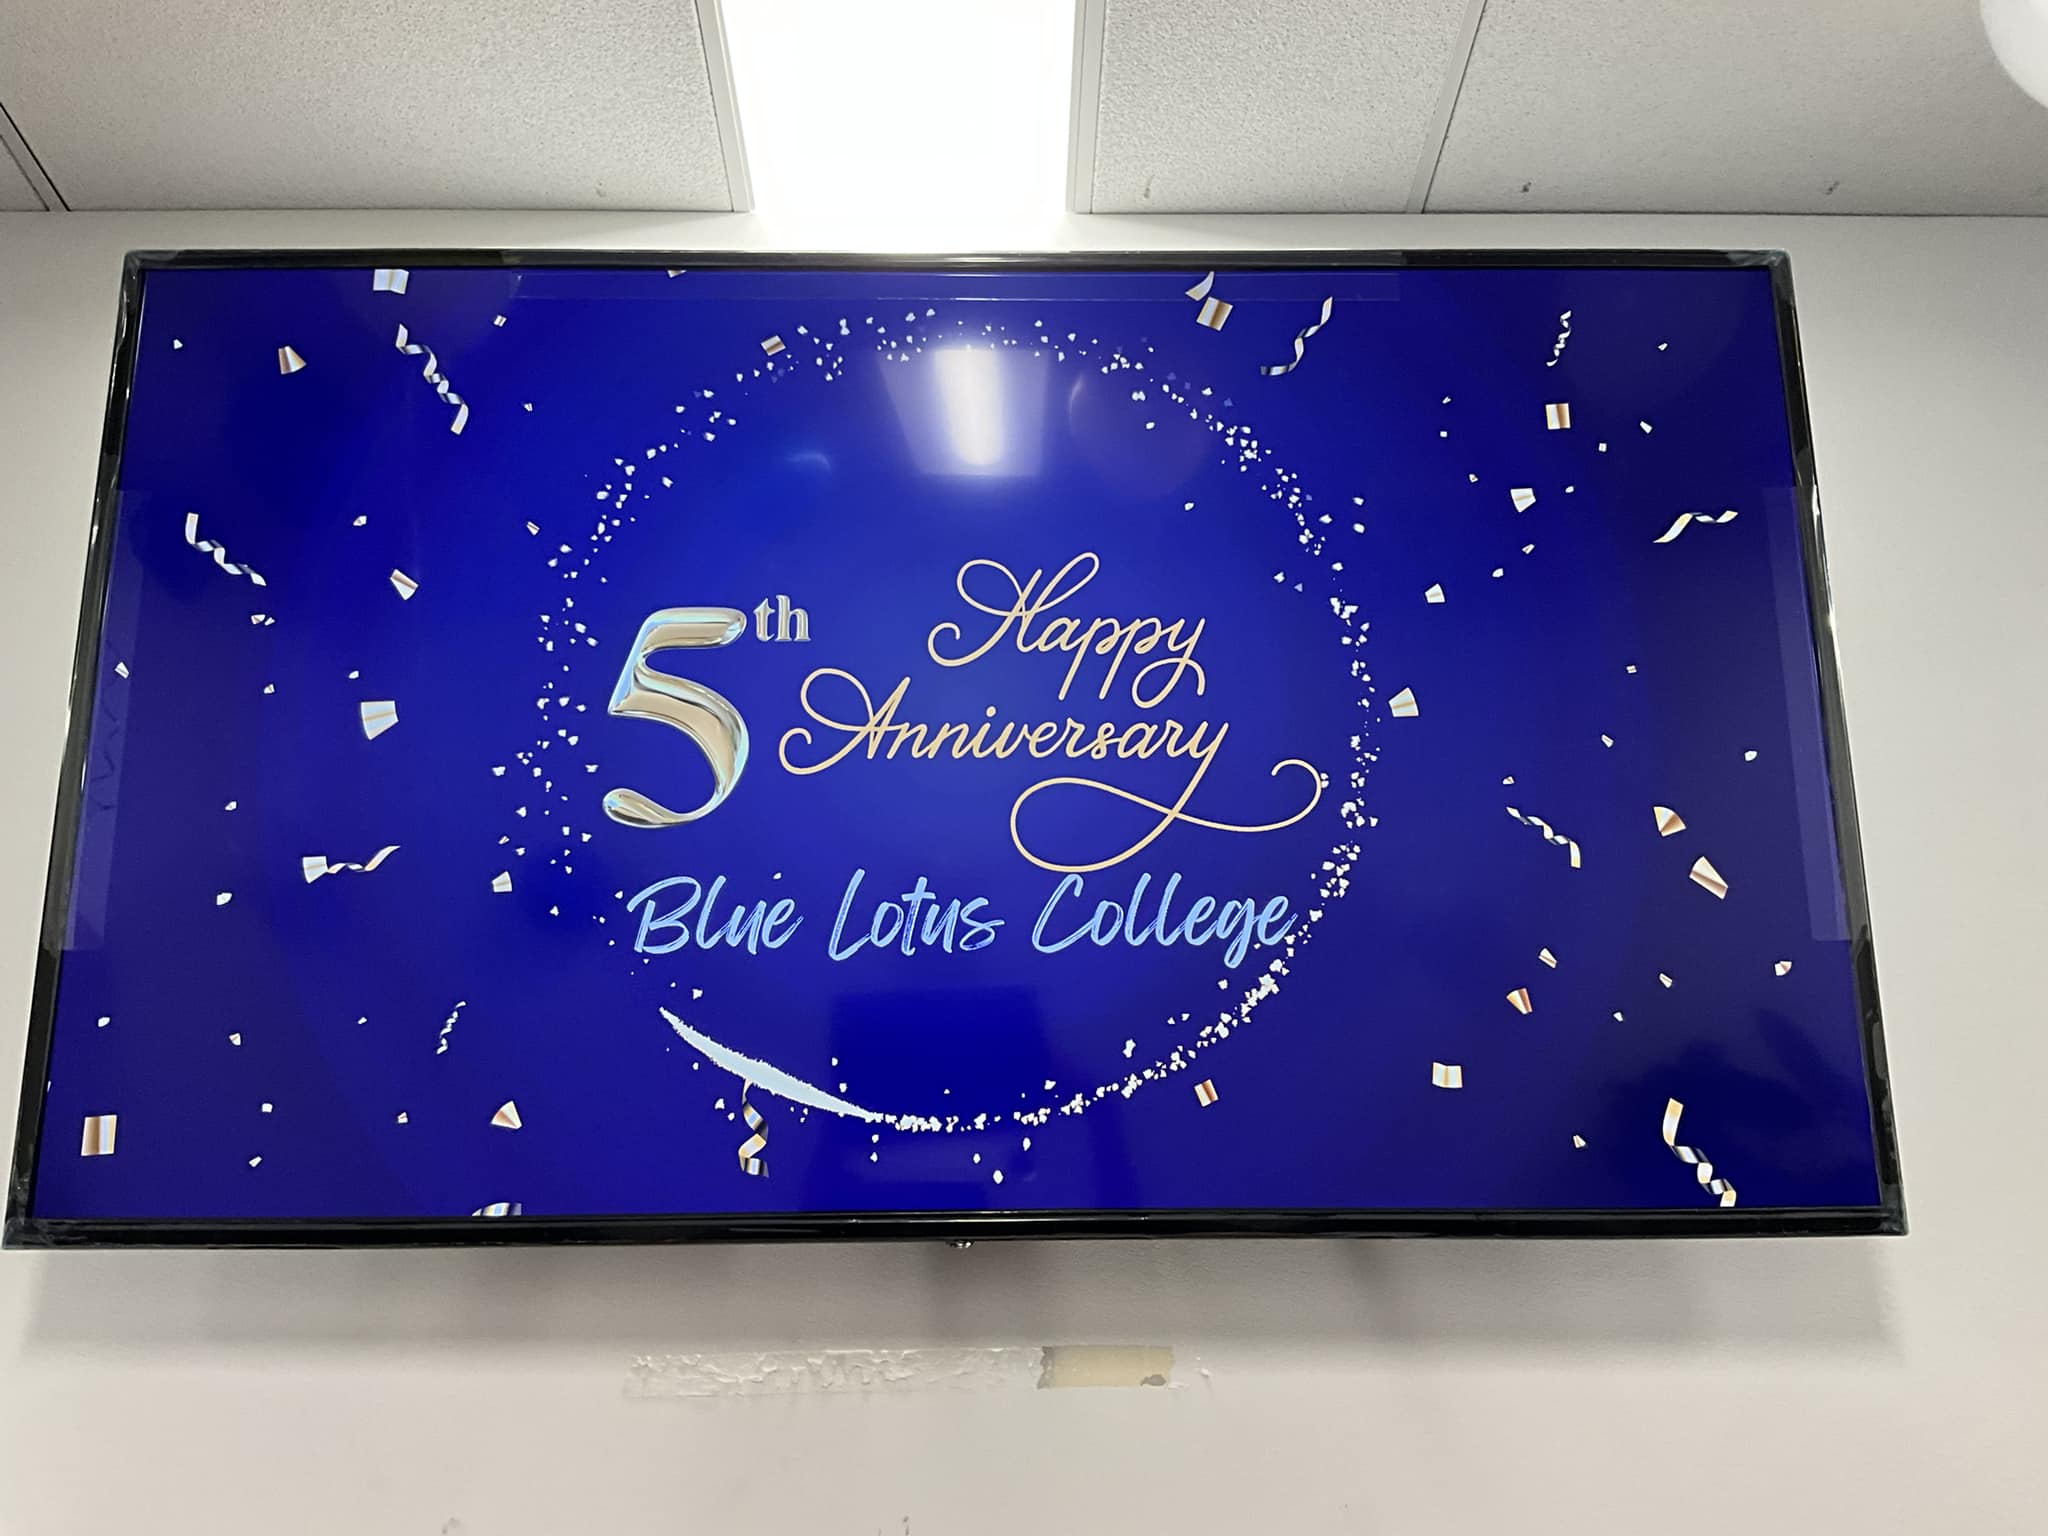 Blue Lotus College 5th anniversary celebration